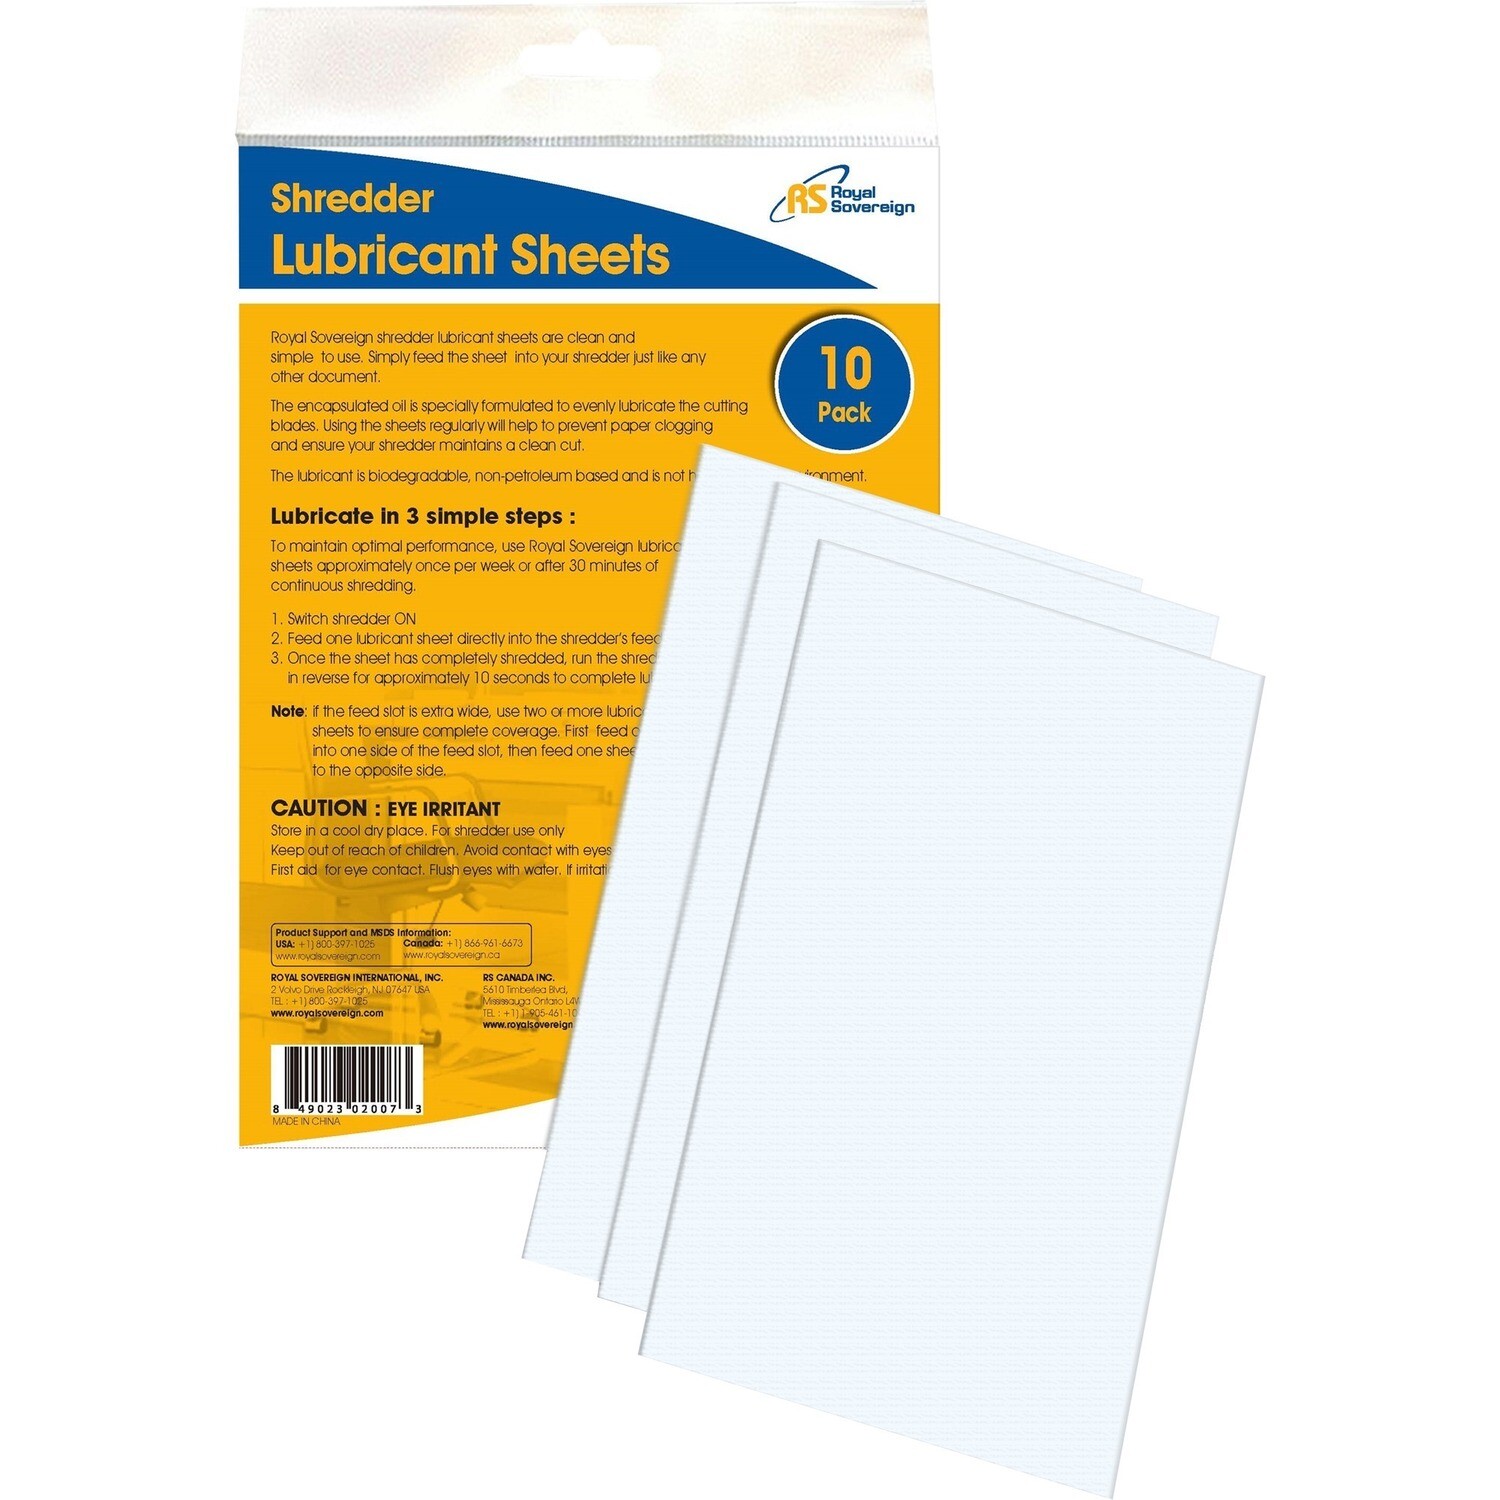 Shredder Lubricant, Sheets 10 Pack, Royal Sovereign